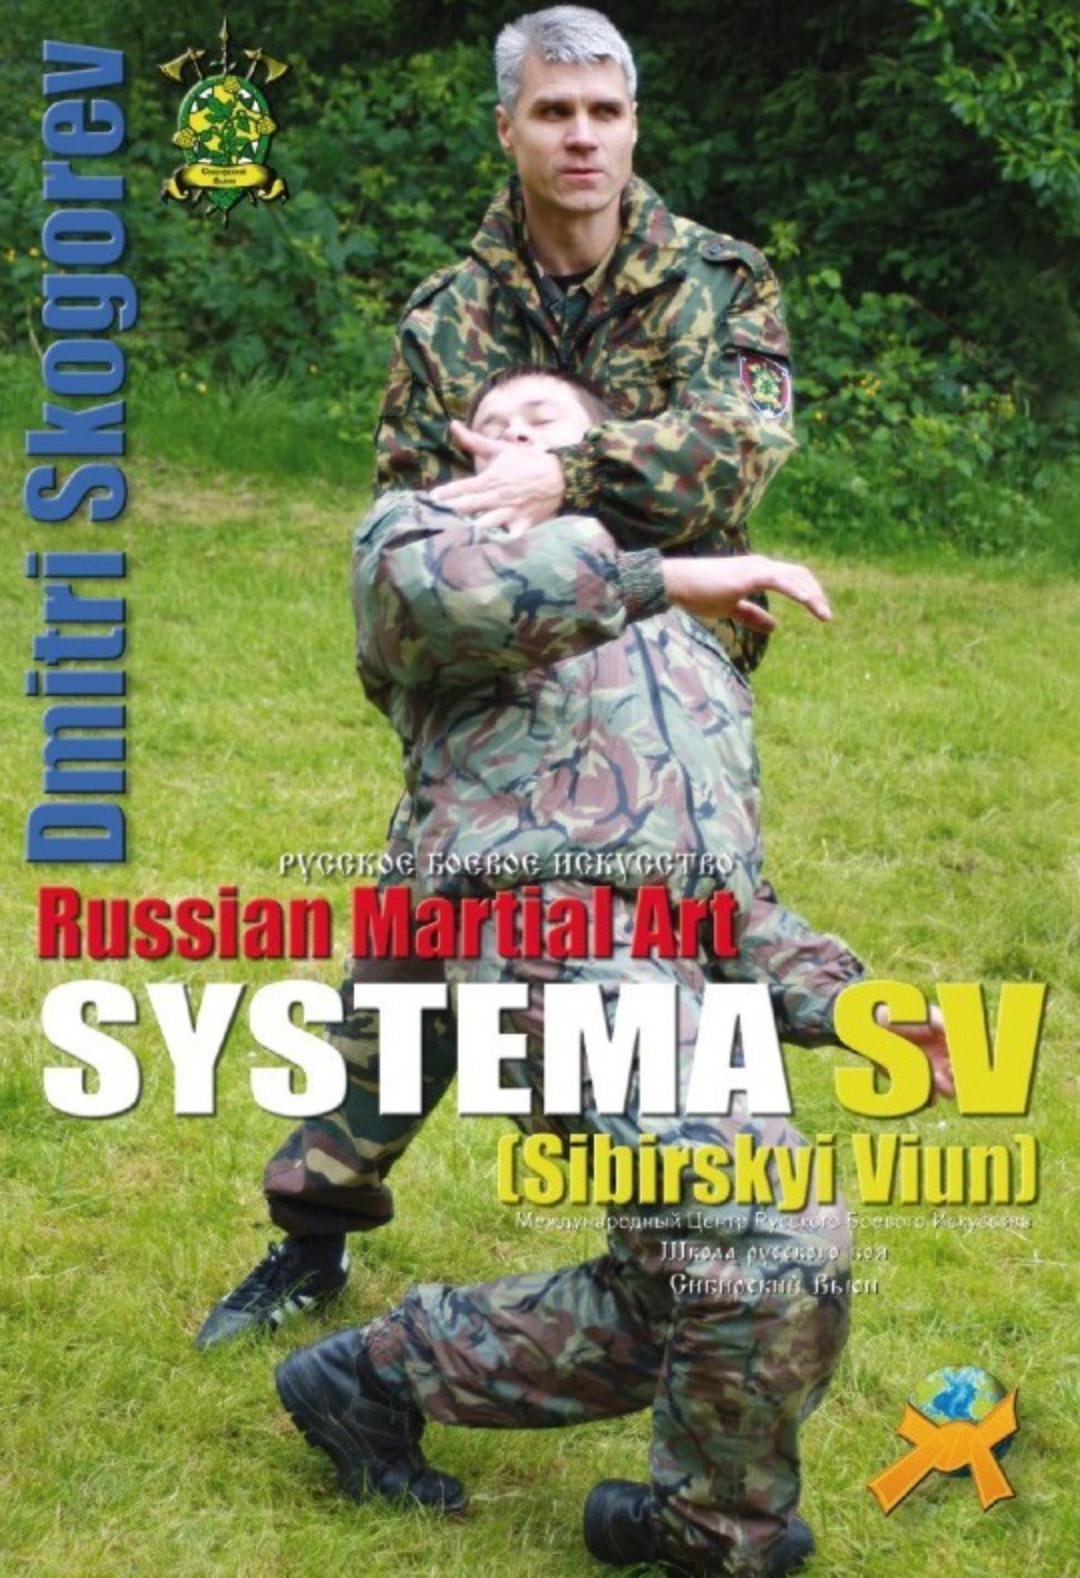 Russian Martial Art Systema SV Training Program Vol 1 DVD by Dmitri Skogorev - Budovideos Inc